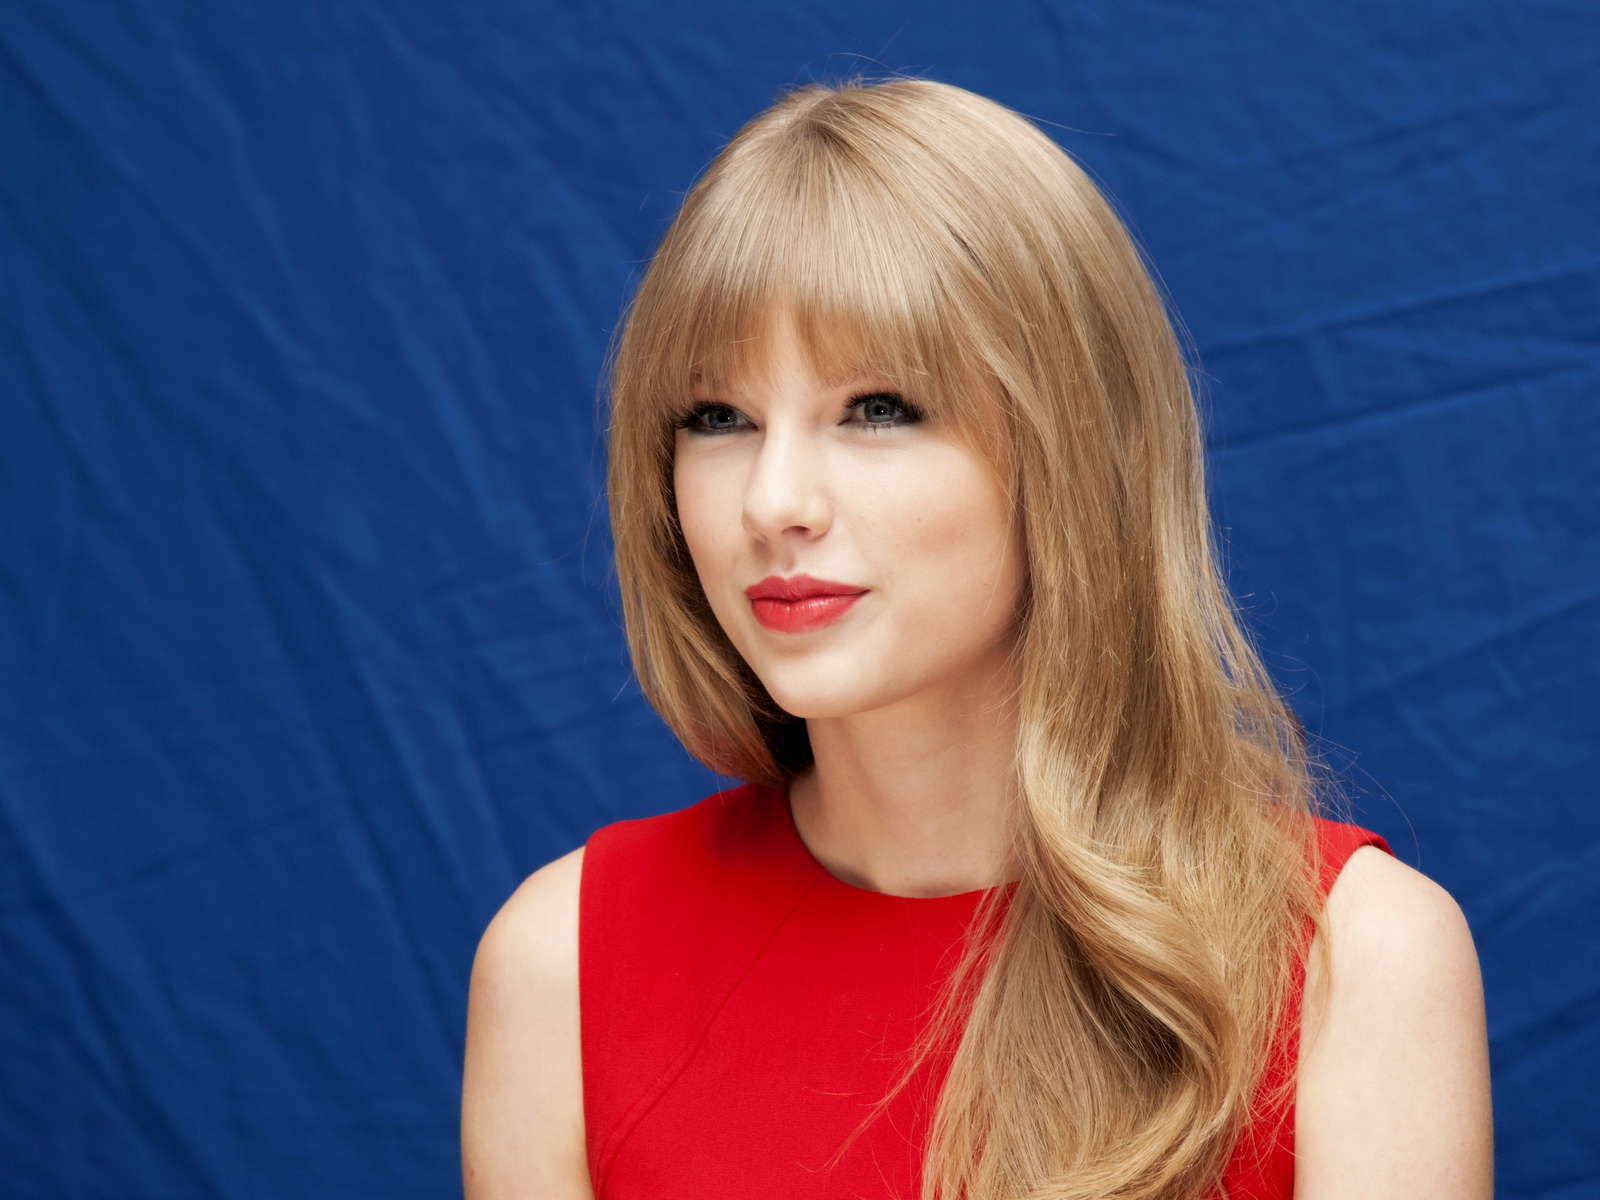 Description Red Taylor Swift Wallpaper Is A Hi Res For